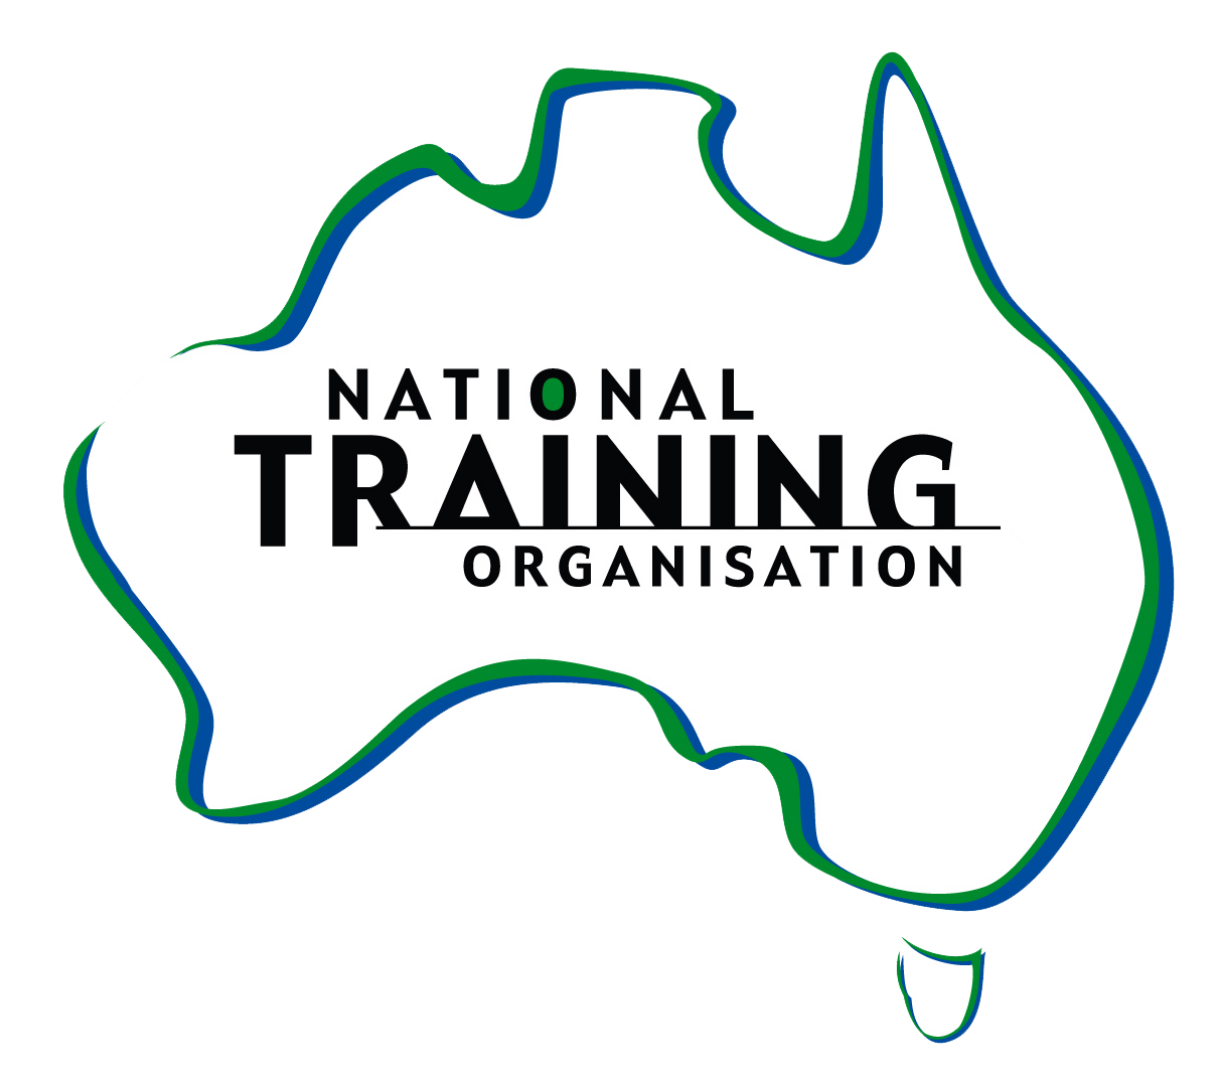 National Training Organisation